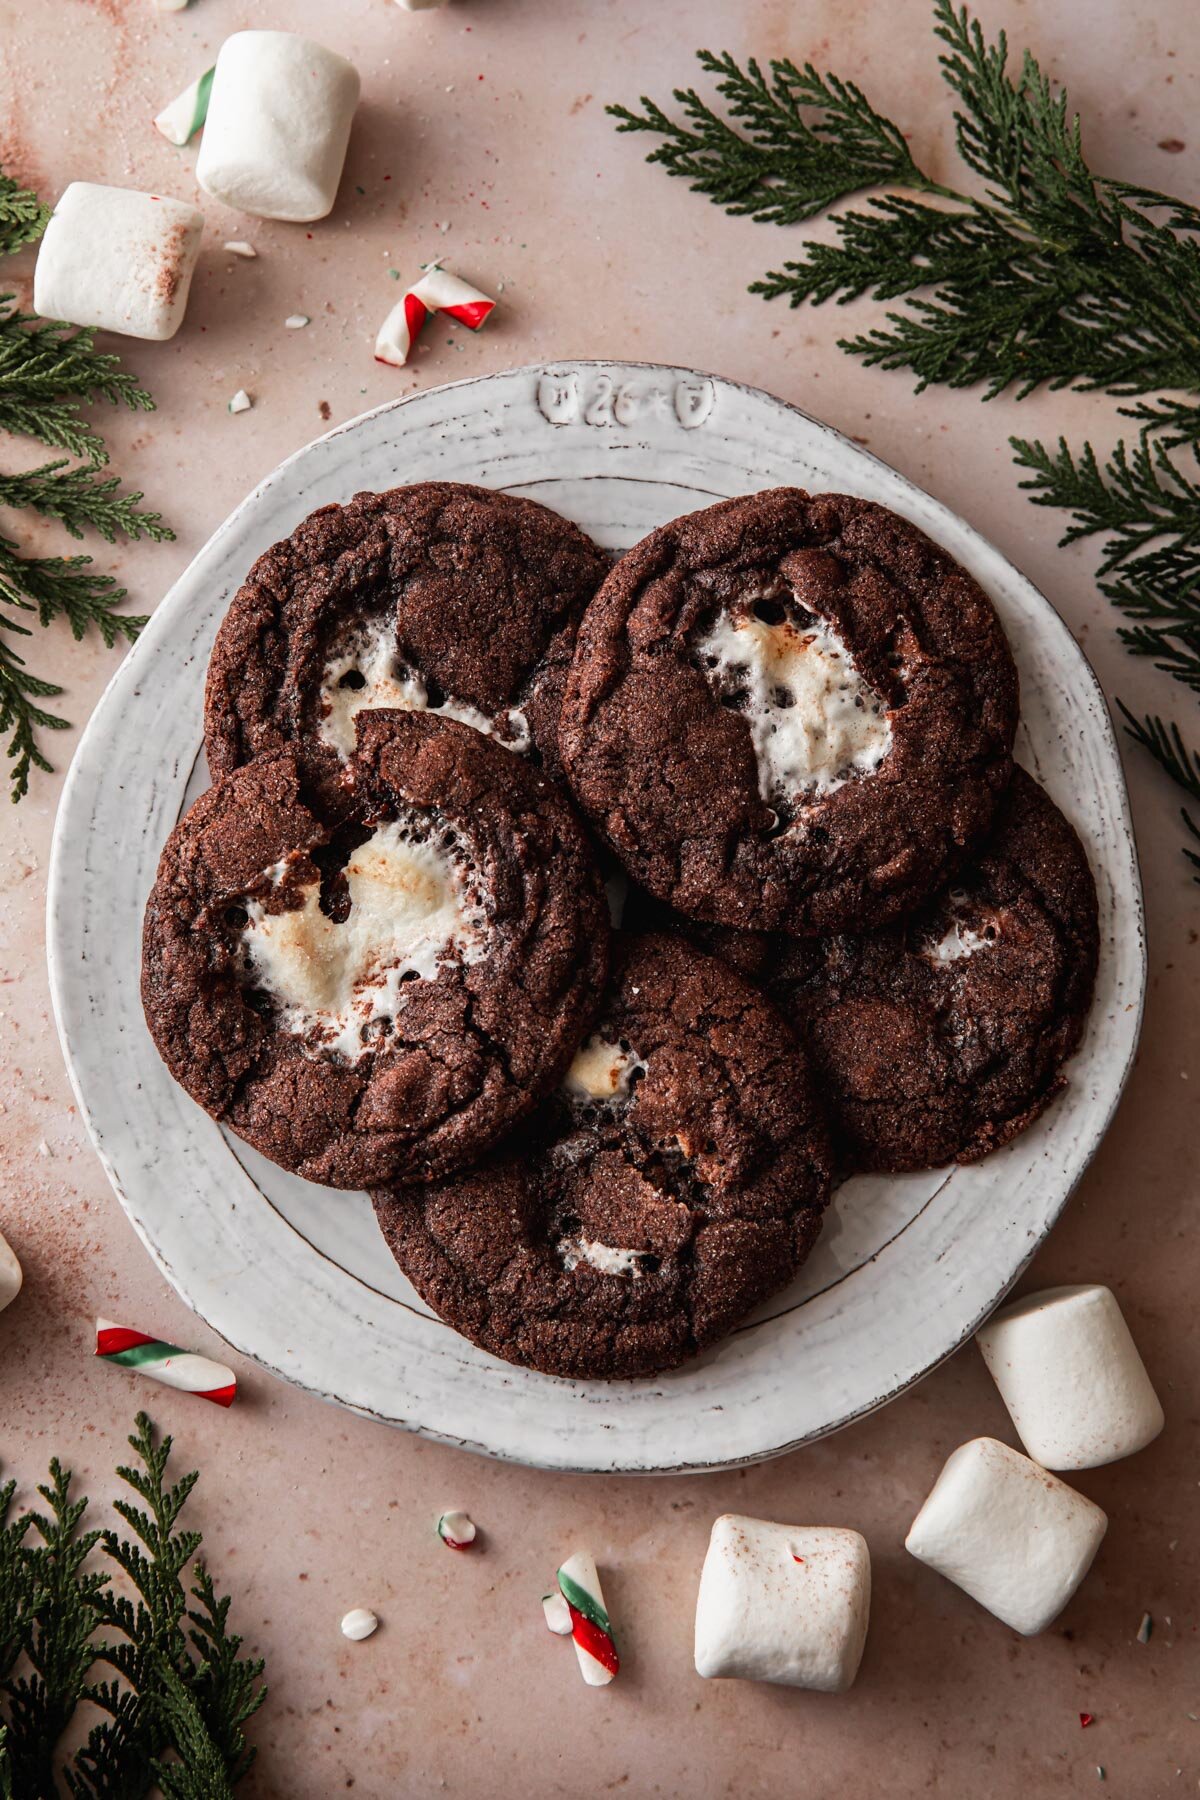 Marshmallow stuffed chocolate cookies